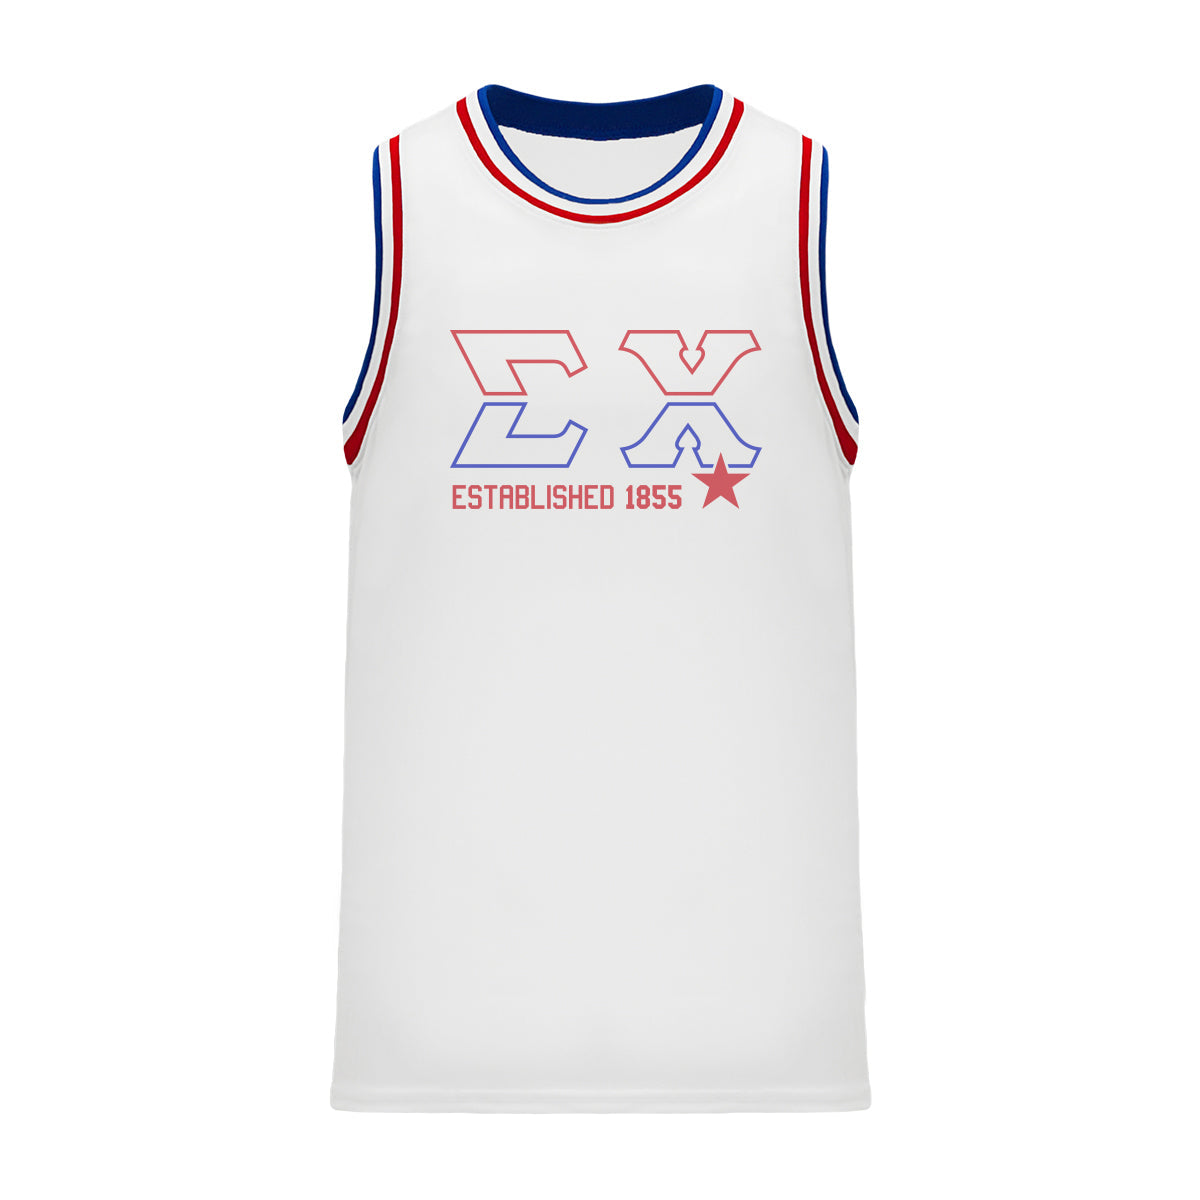 Bulk Order Pro Basketball Jersey by Athletic Knit